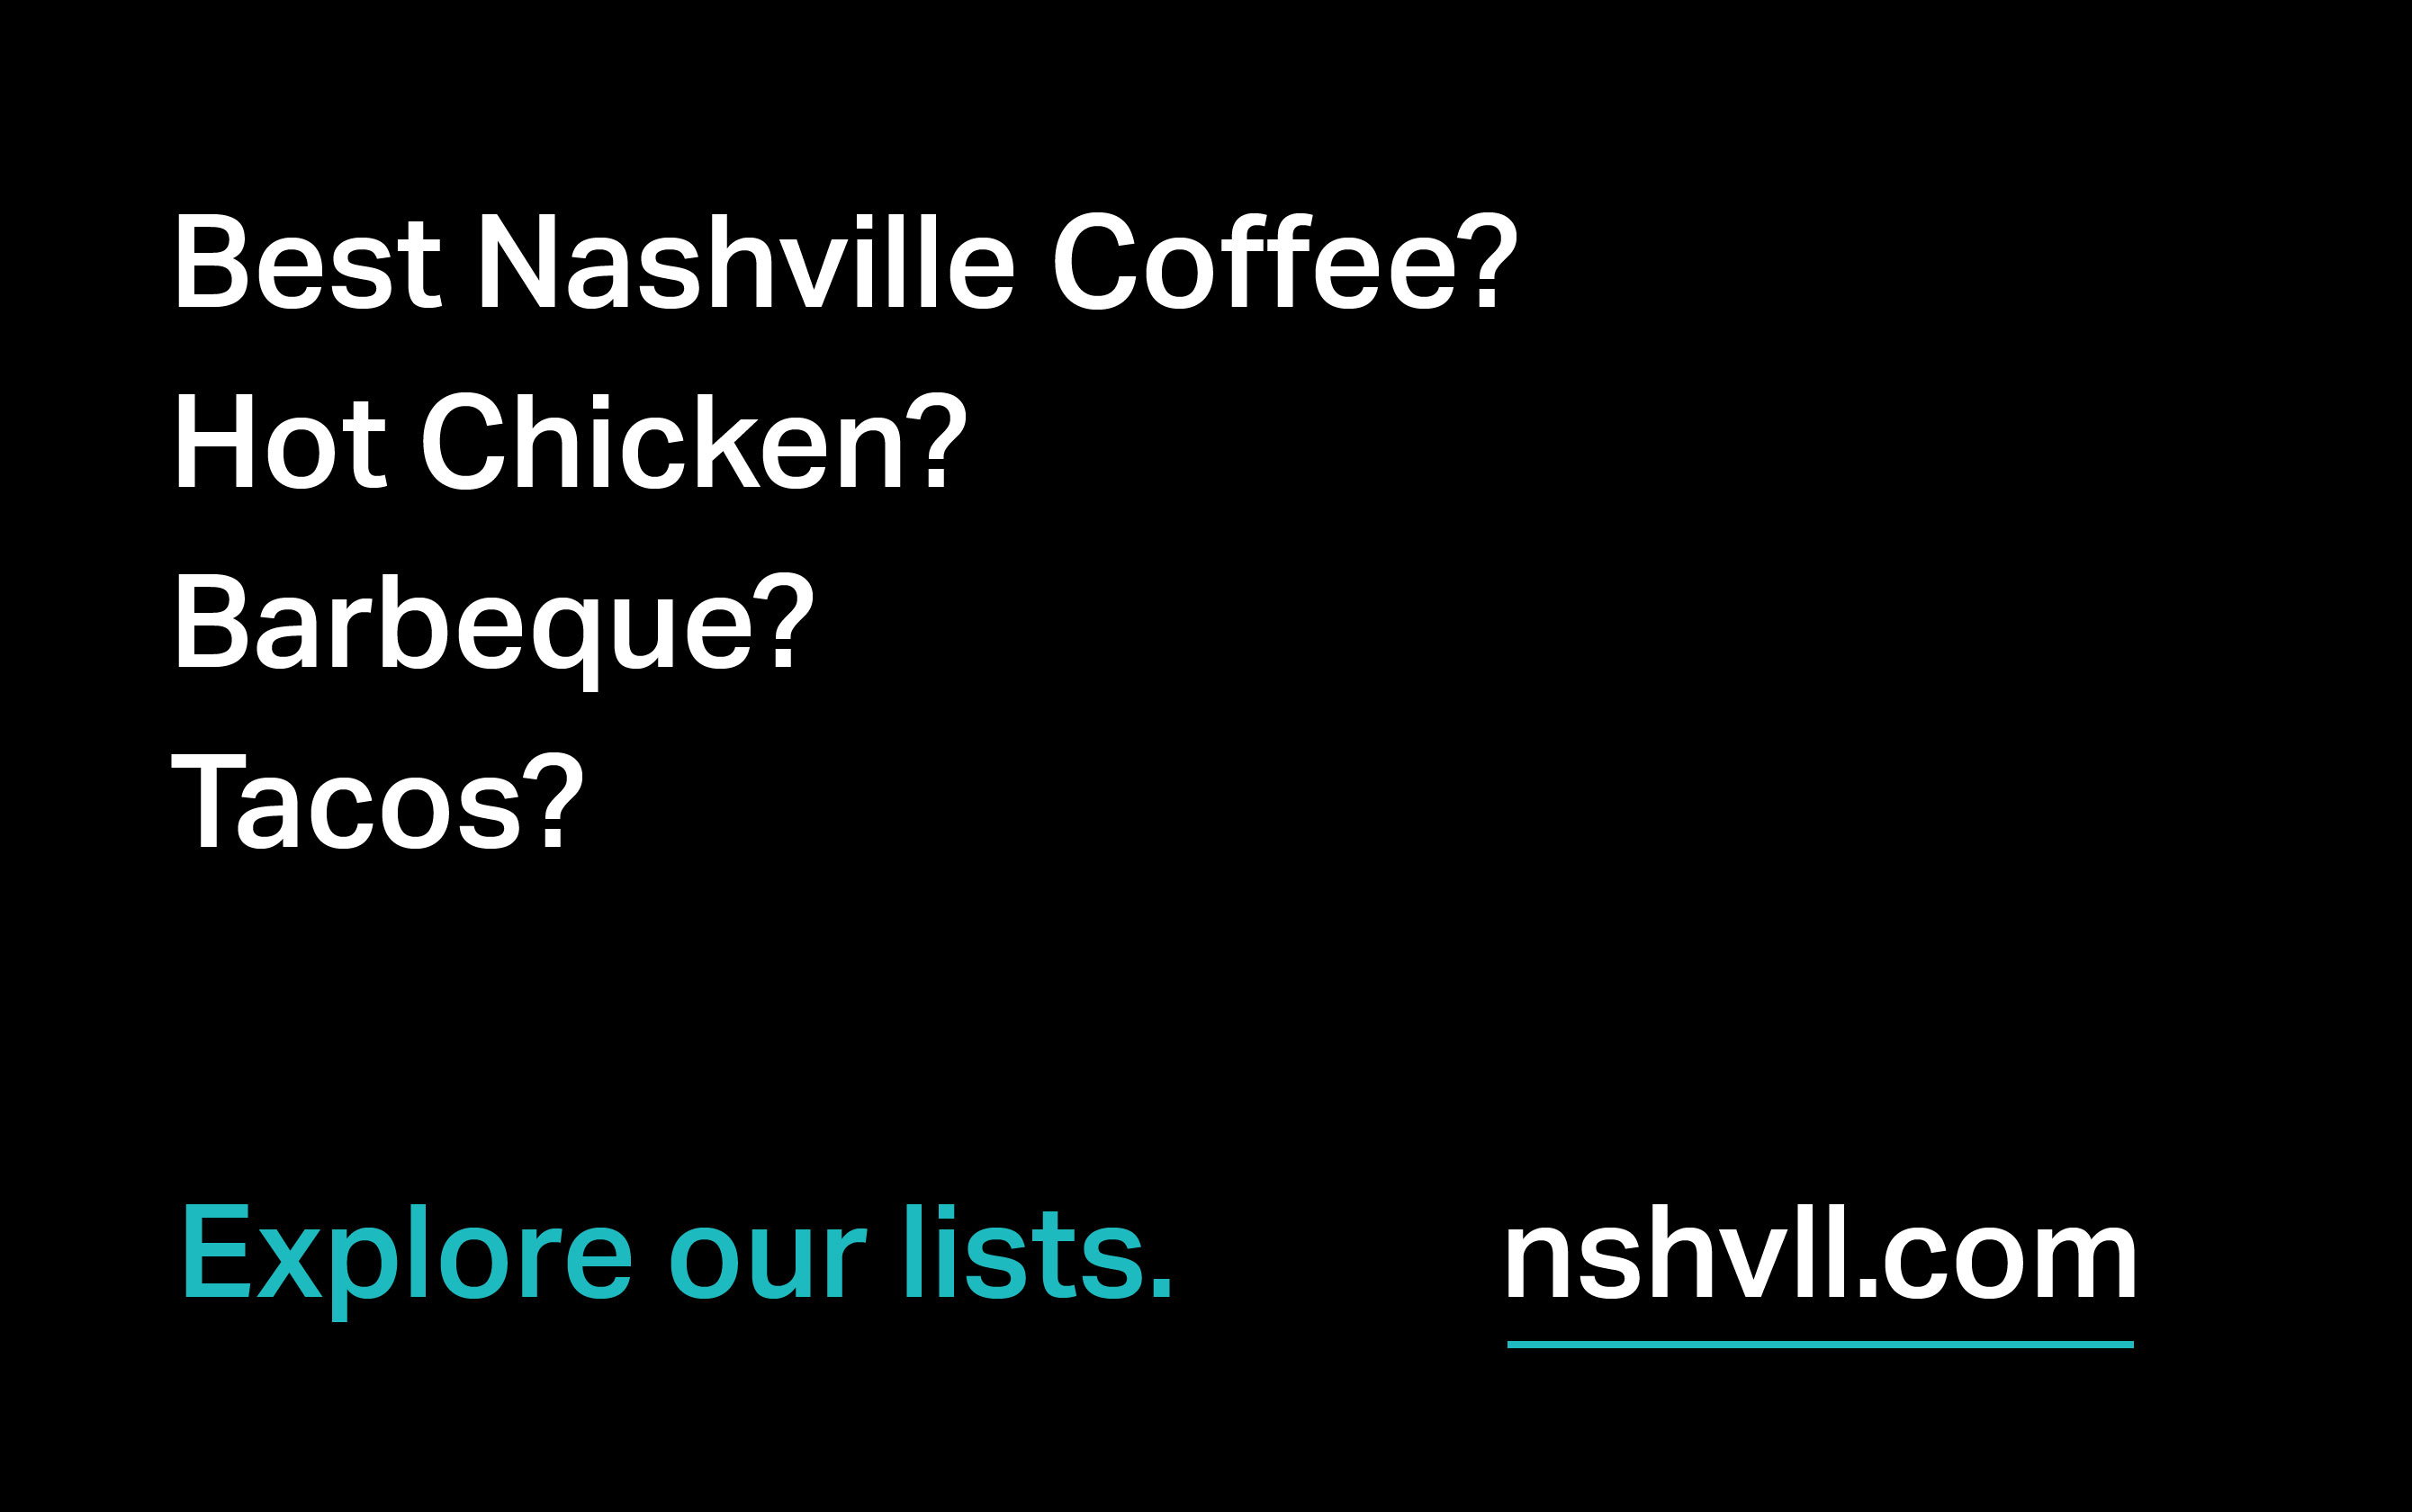 The Nashville app